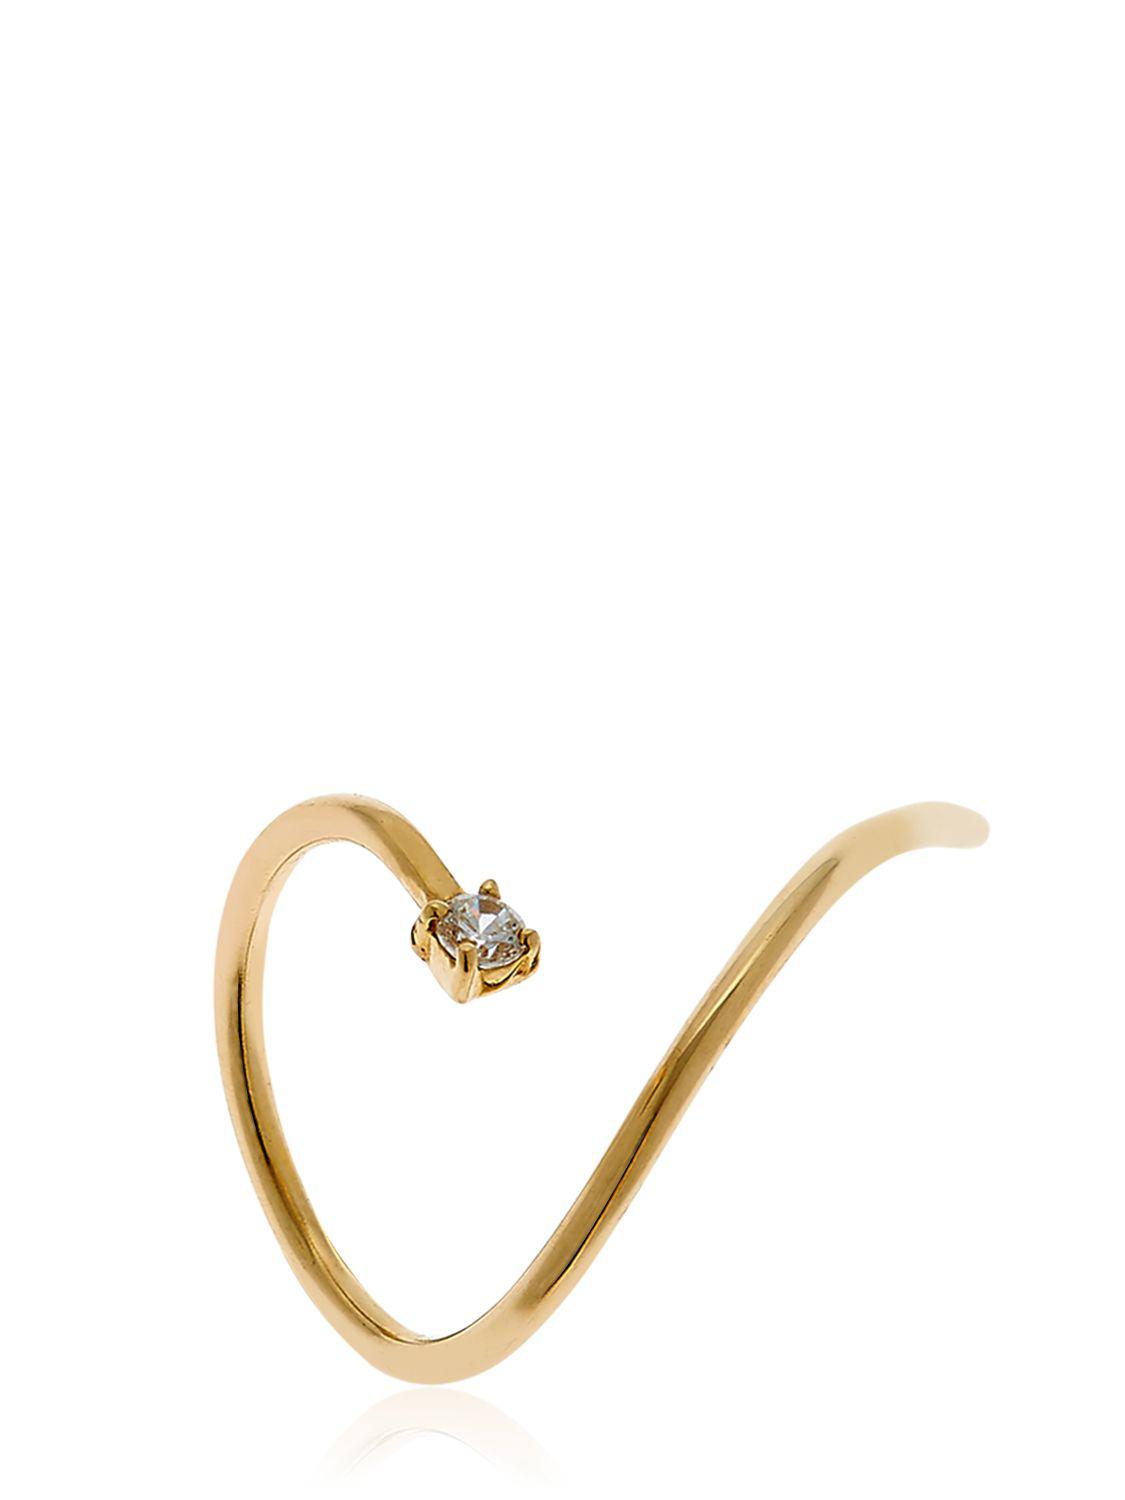 Lyst - Margova Jewellery Whoop Whoop Gold Ring in Metallic